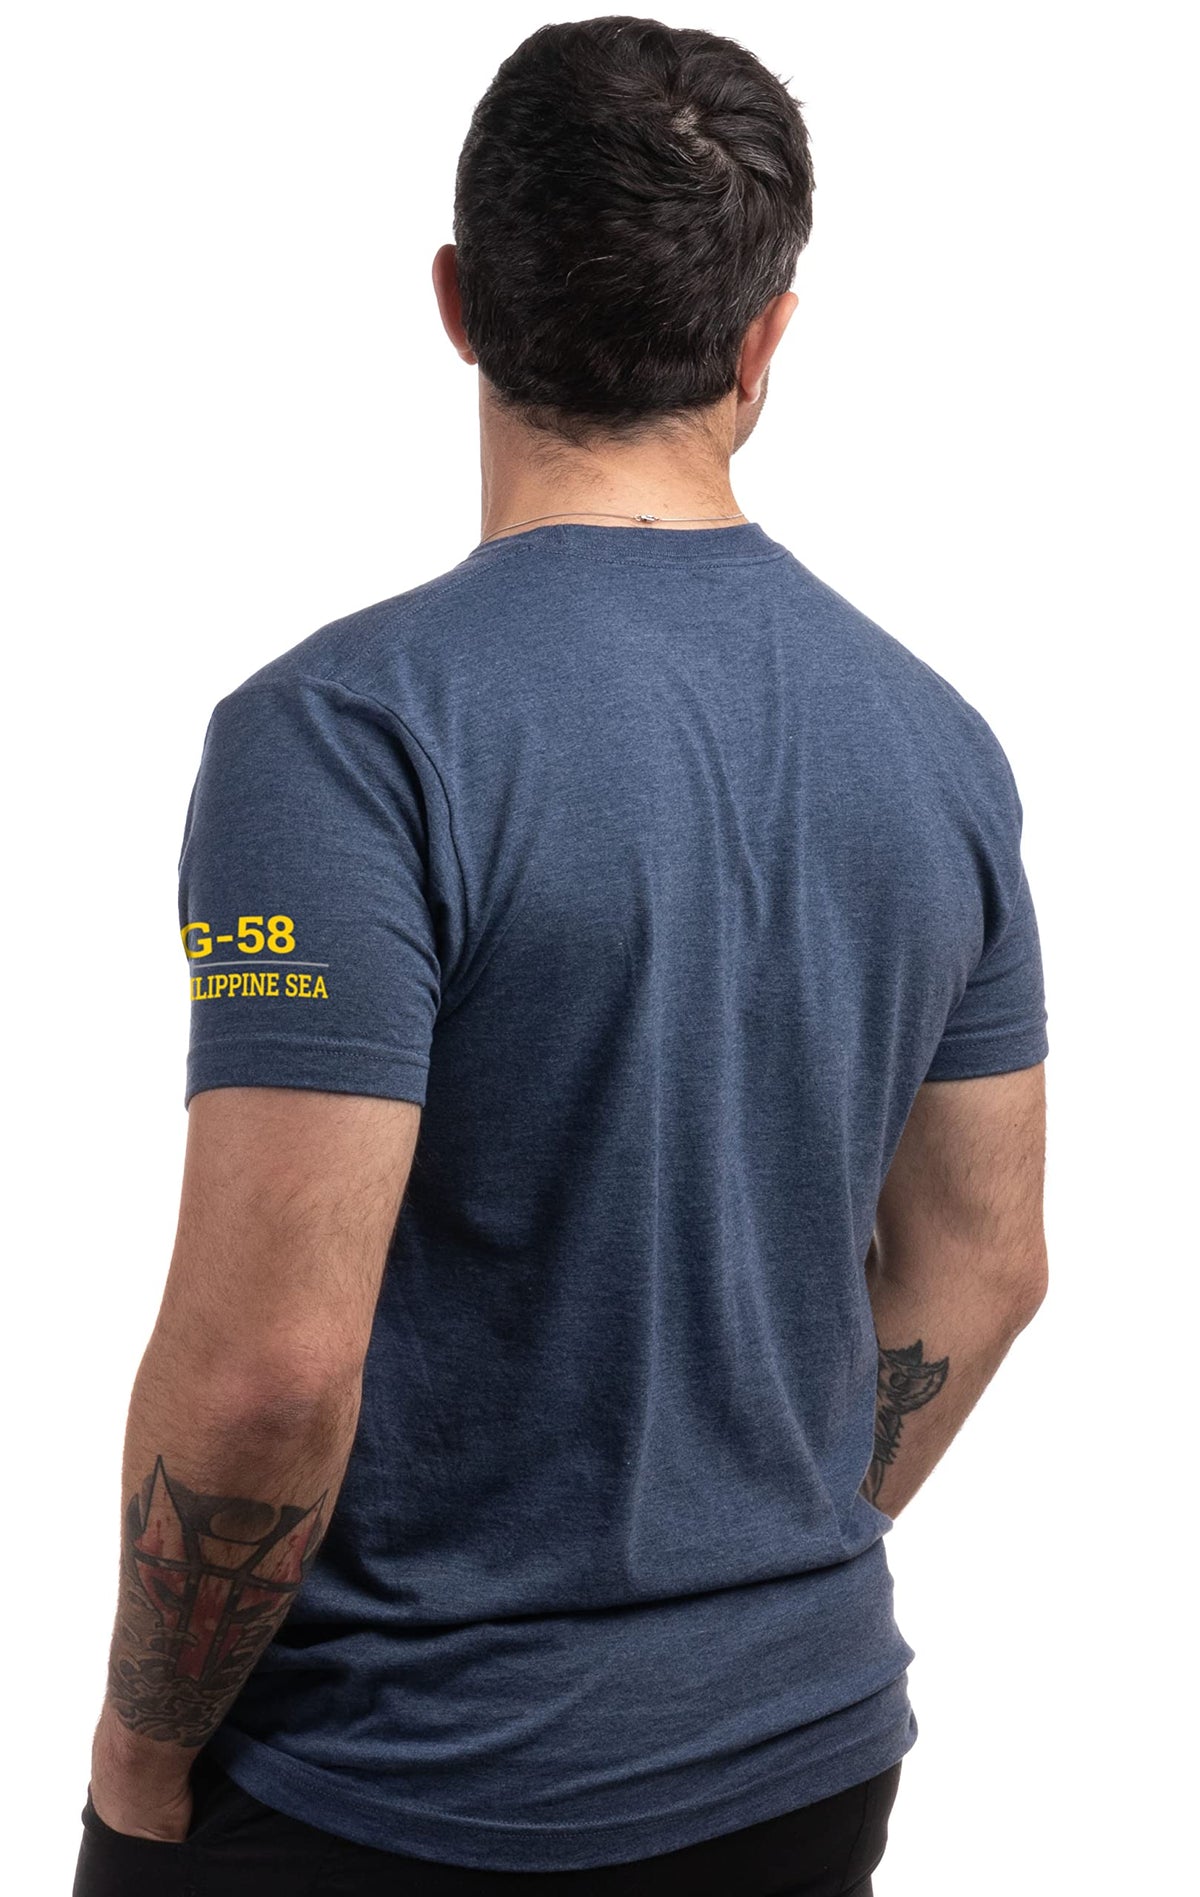 USS Philippine Sea, CG-58 | U.S. Navy Sailor Veteran USN United States Naval T-shirt for Men Women